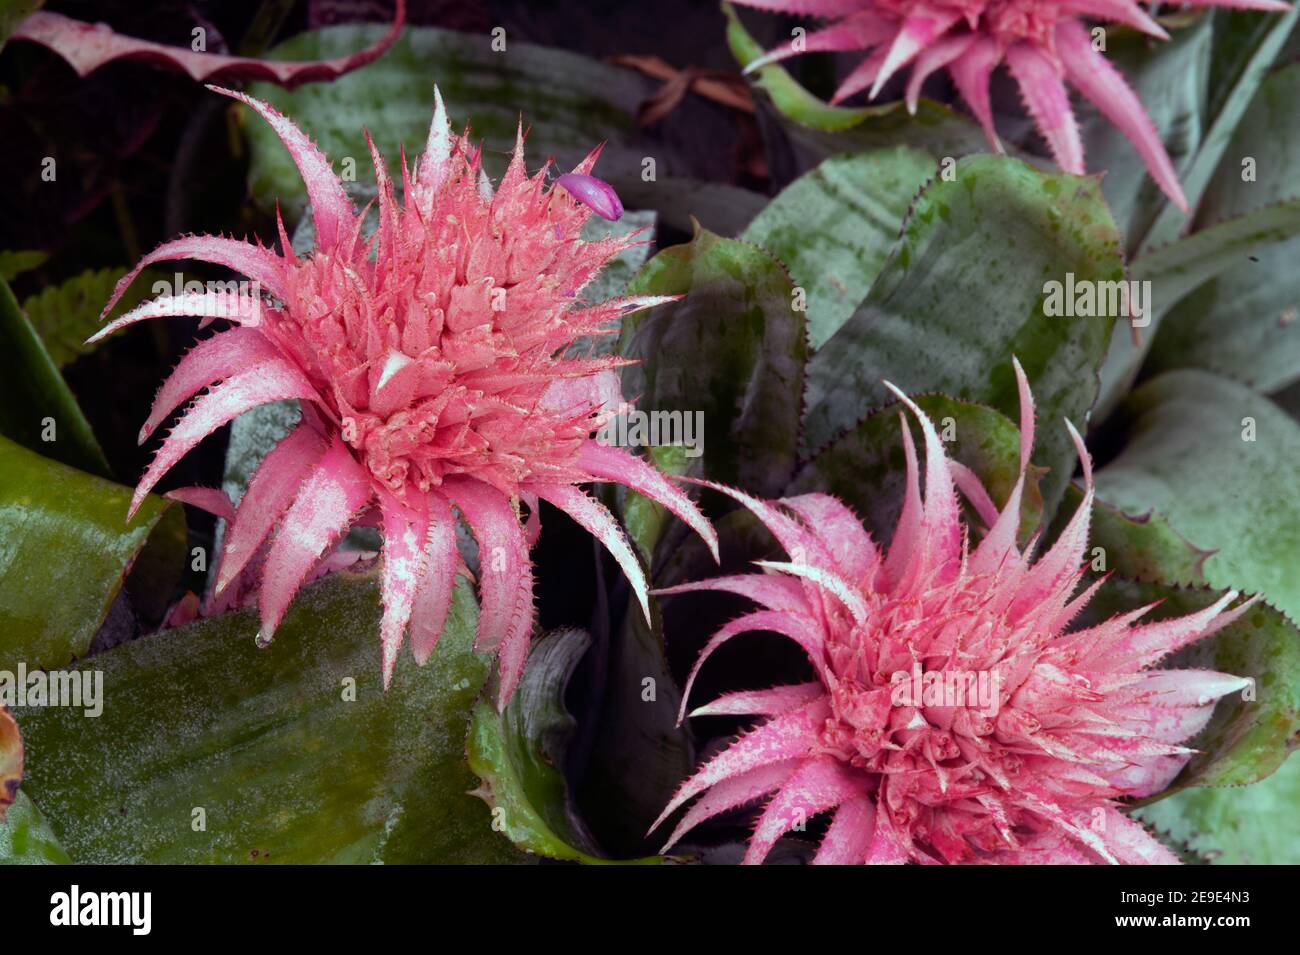 Pink bromeliad flower of Aechmea fasciata Silver Vase or Urn Plant. Stock Photo